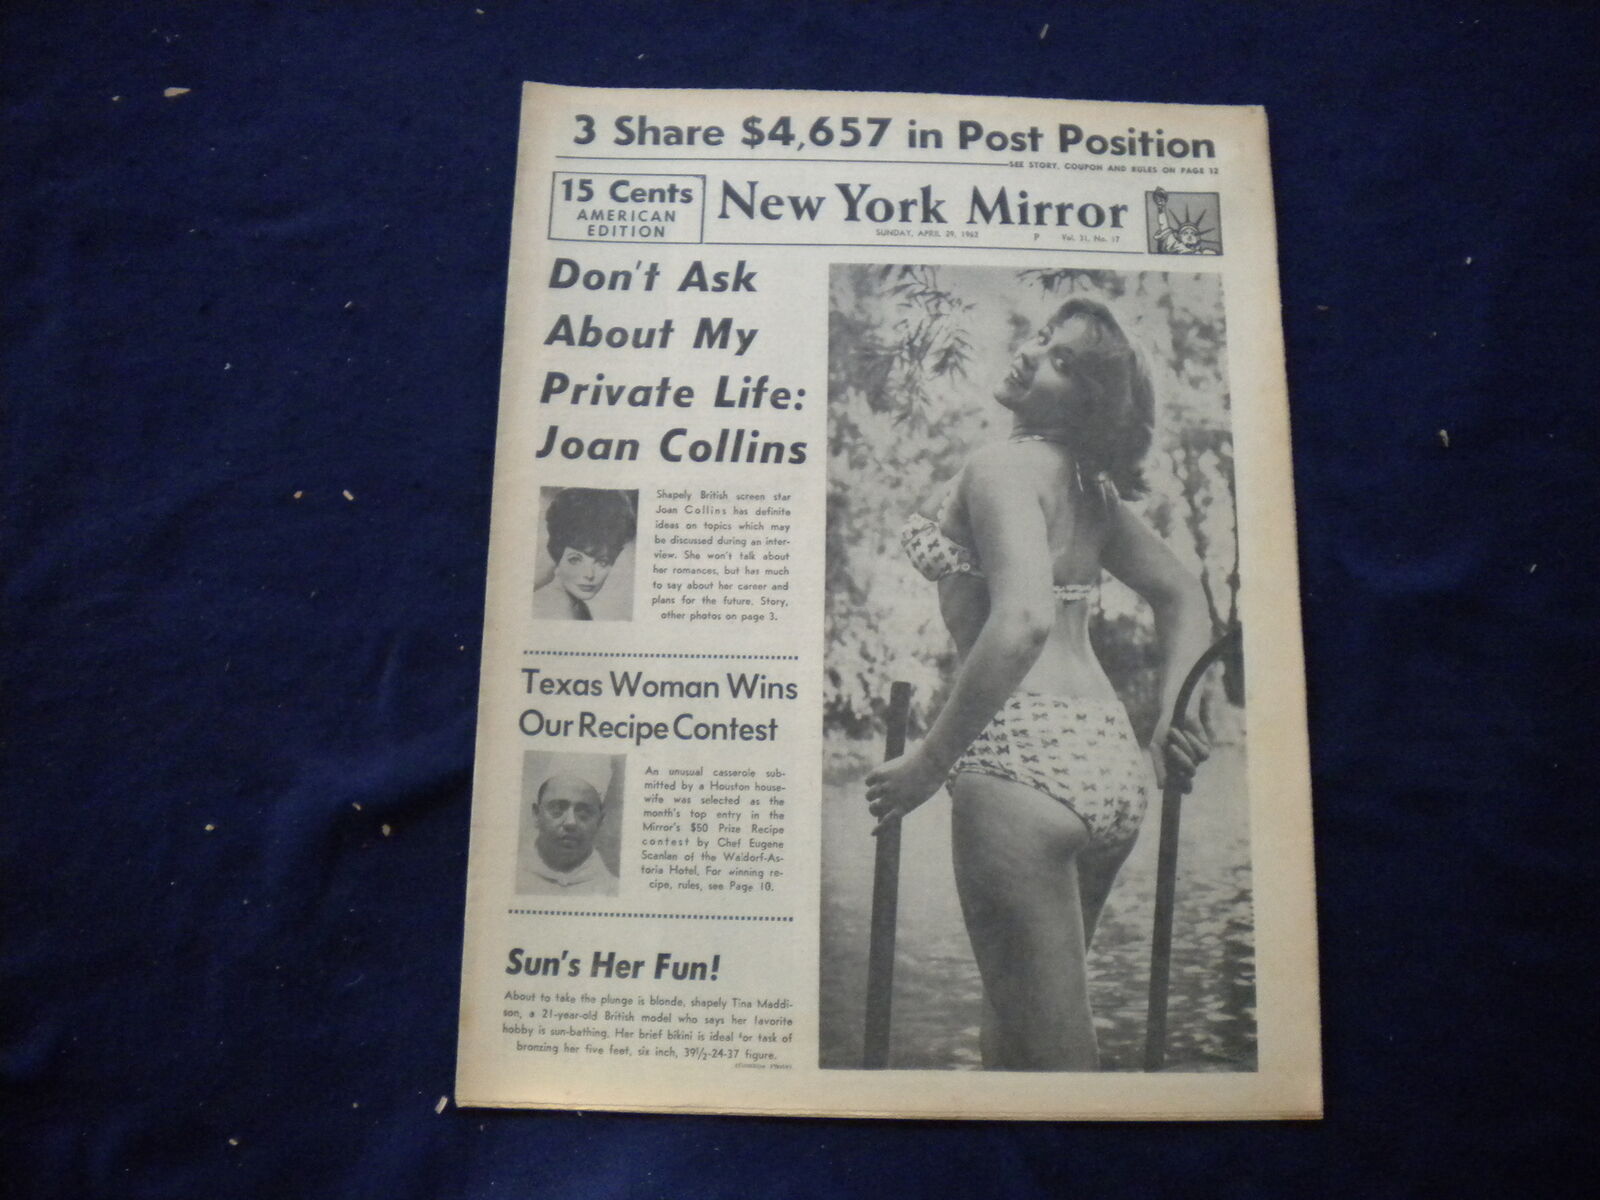 1962 APRIL 29 NEW YORK MIRROR NEWSPAPER - TINA MADDISON COVER PHOTO - NP 6001